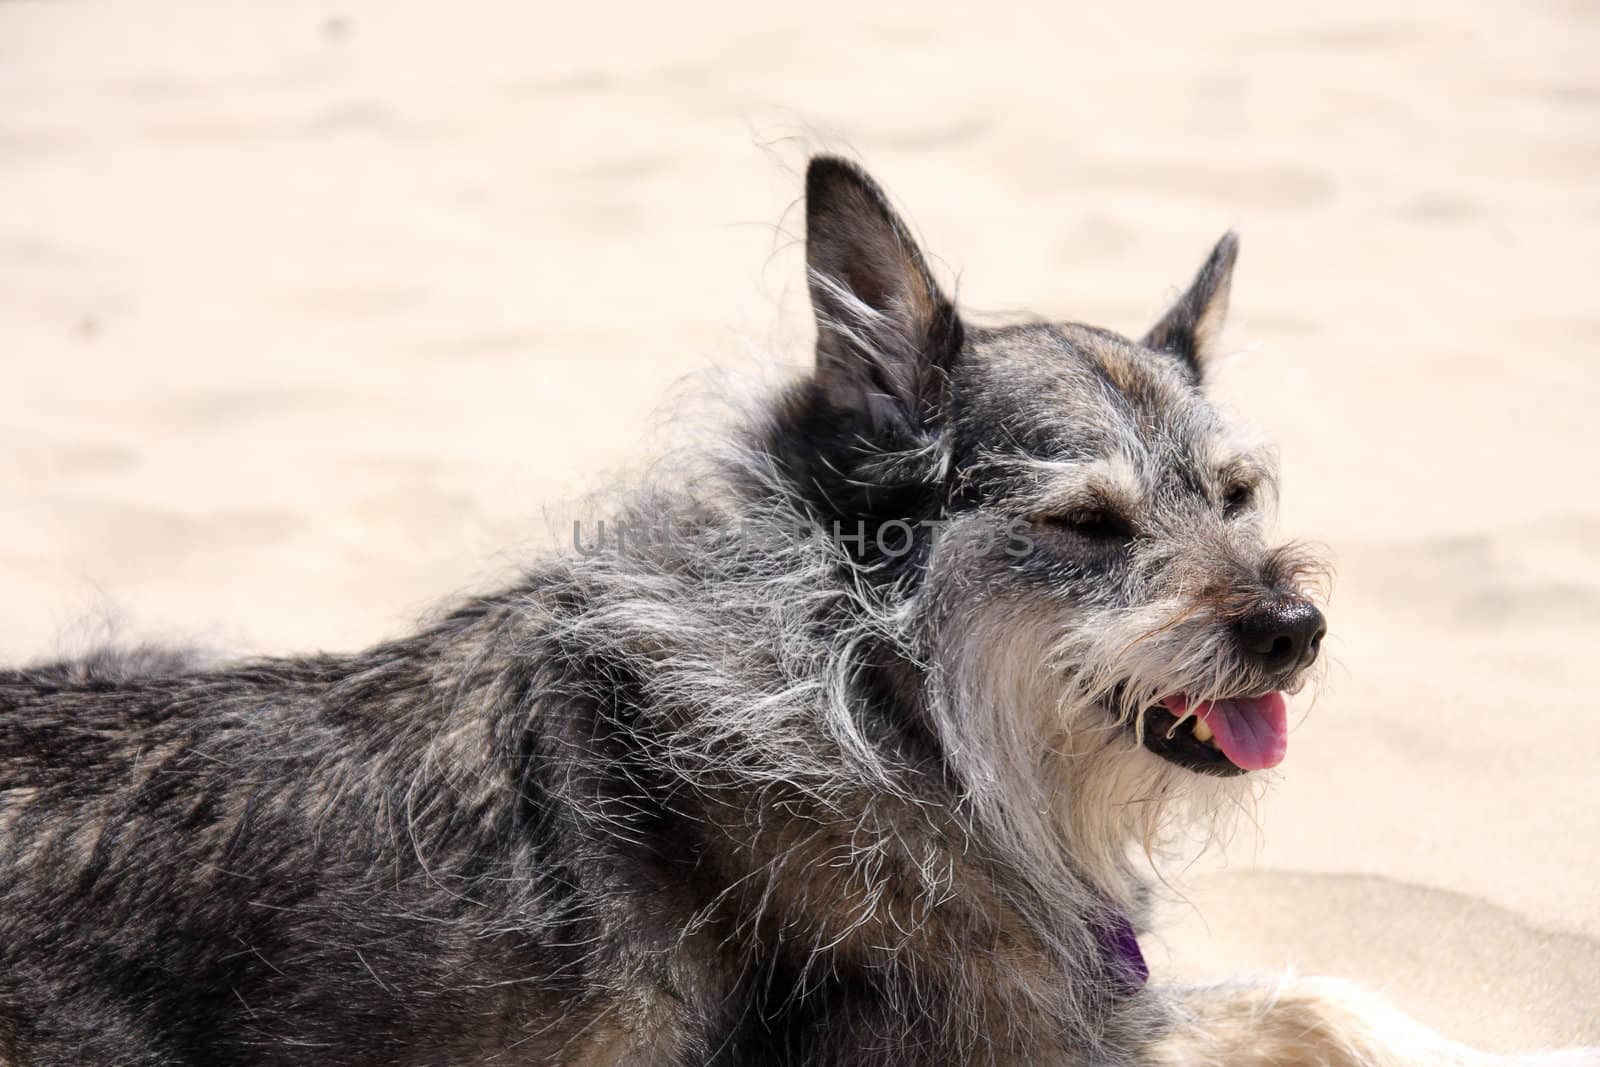 Dog resting on the beach by svanblar